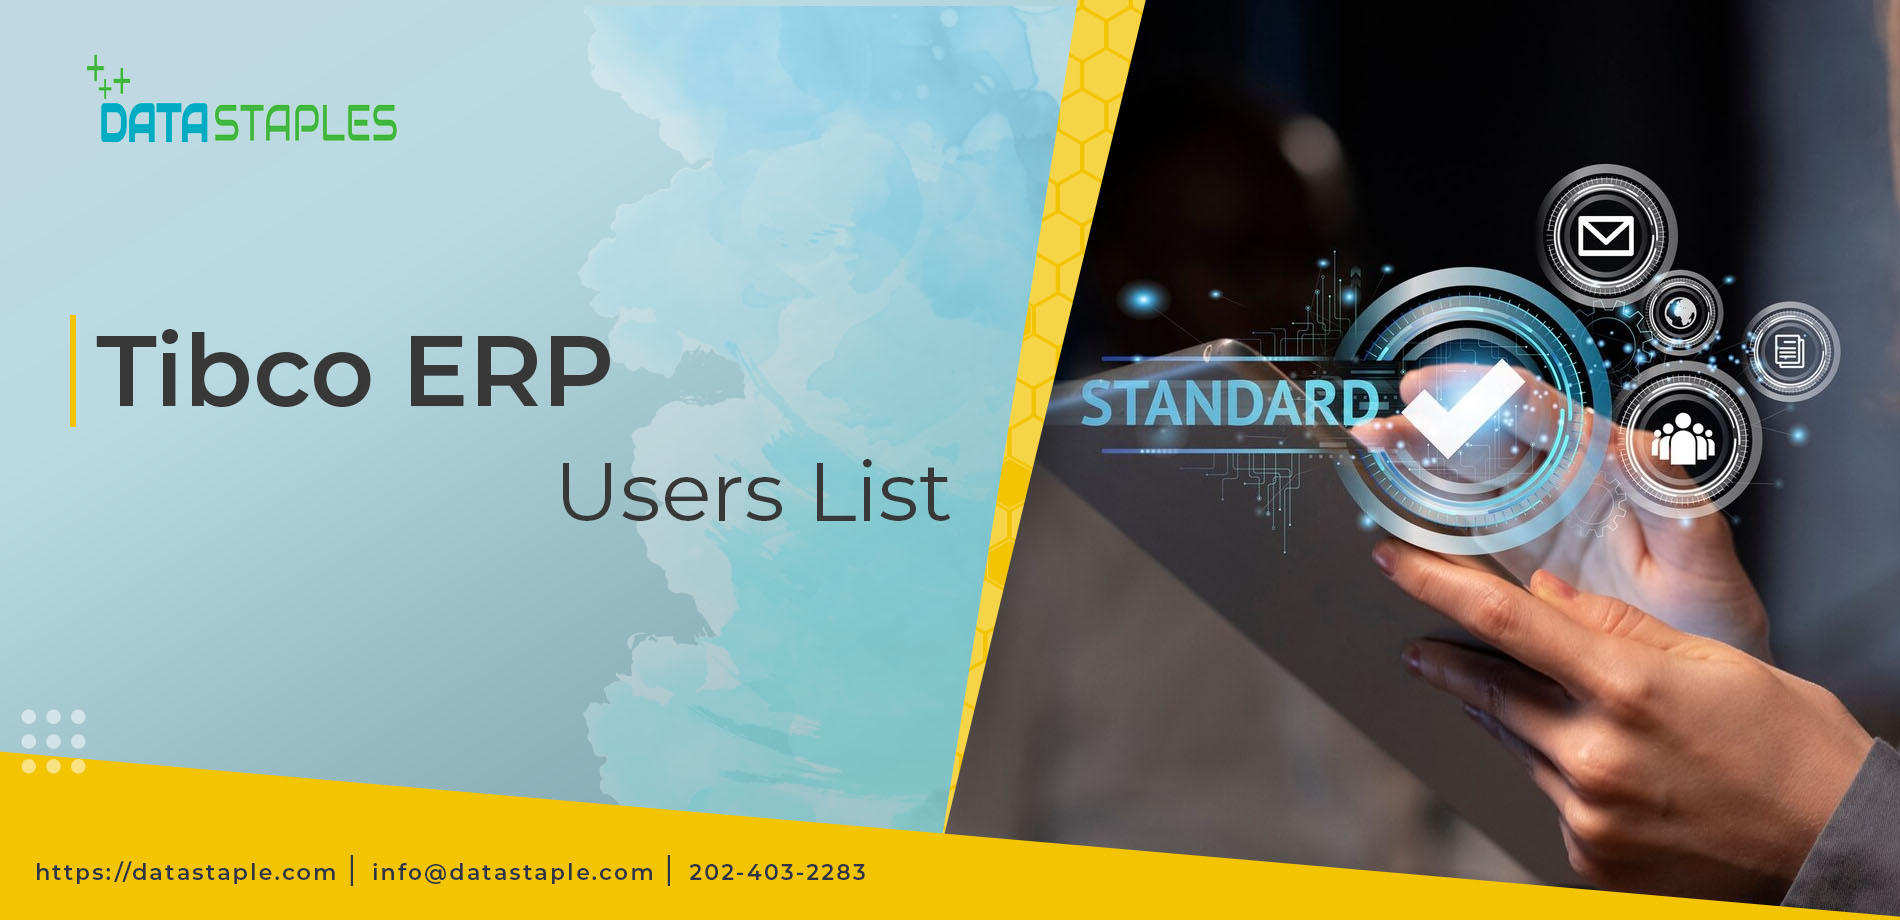 Tibco ERP Users List | DataStaples